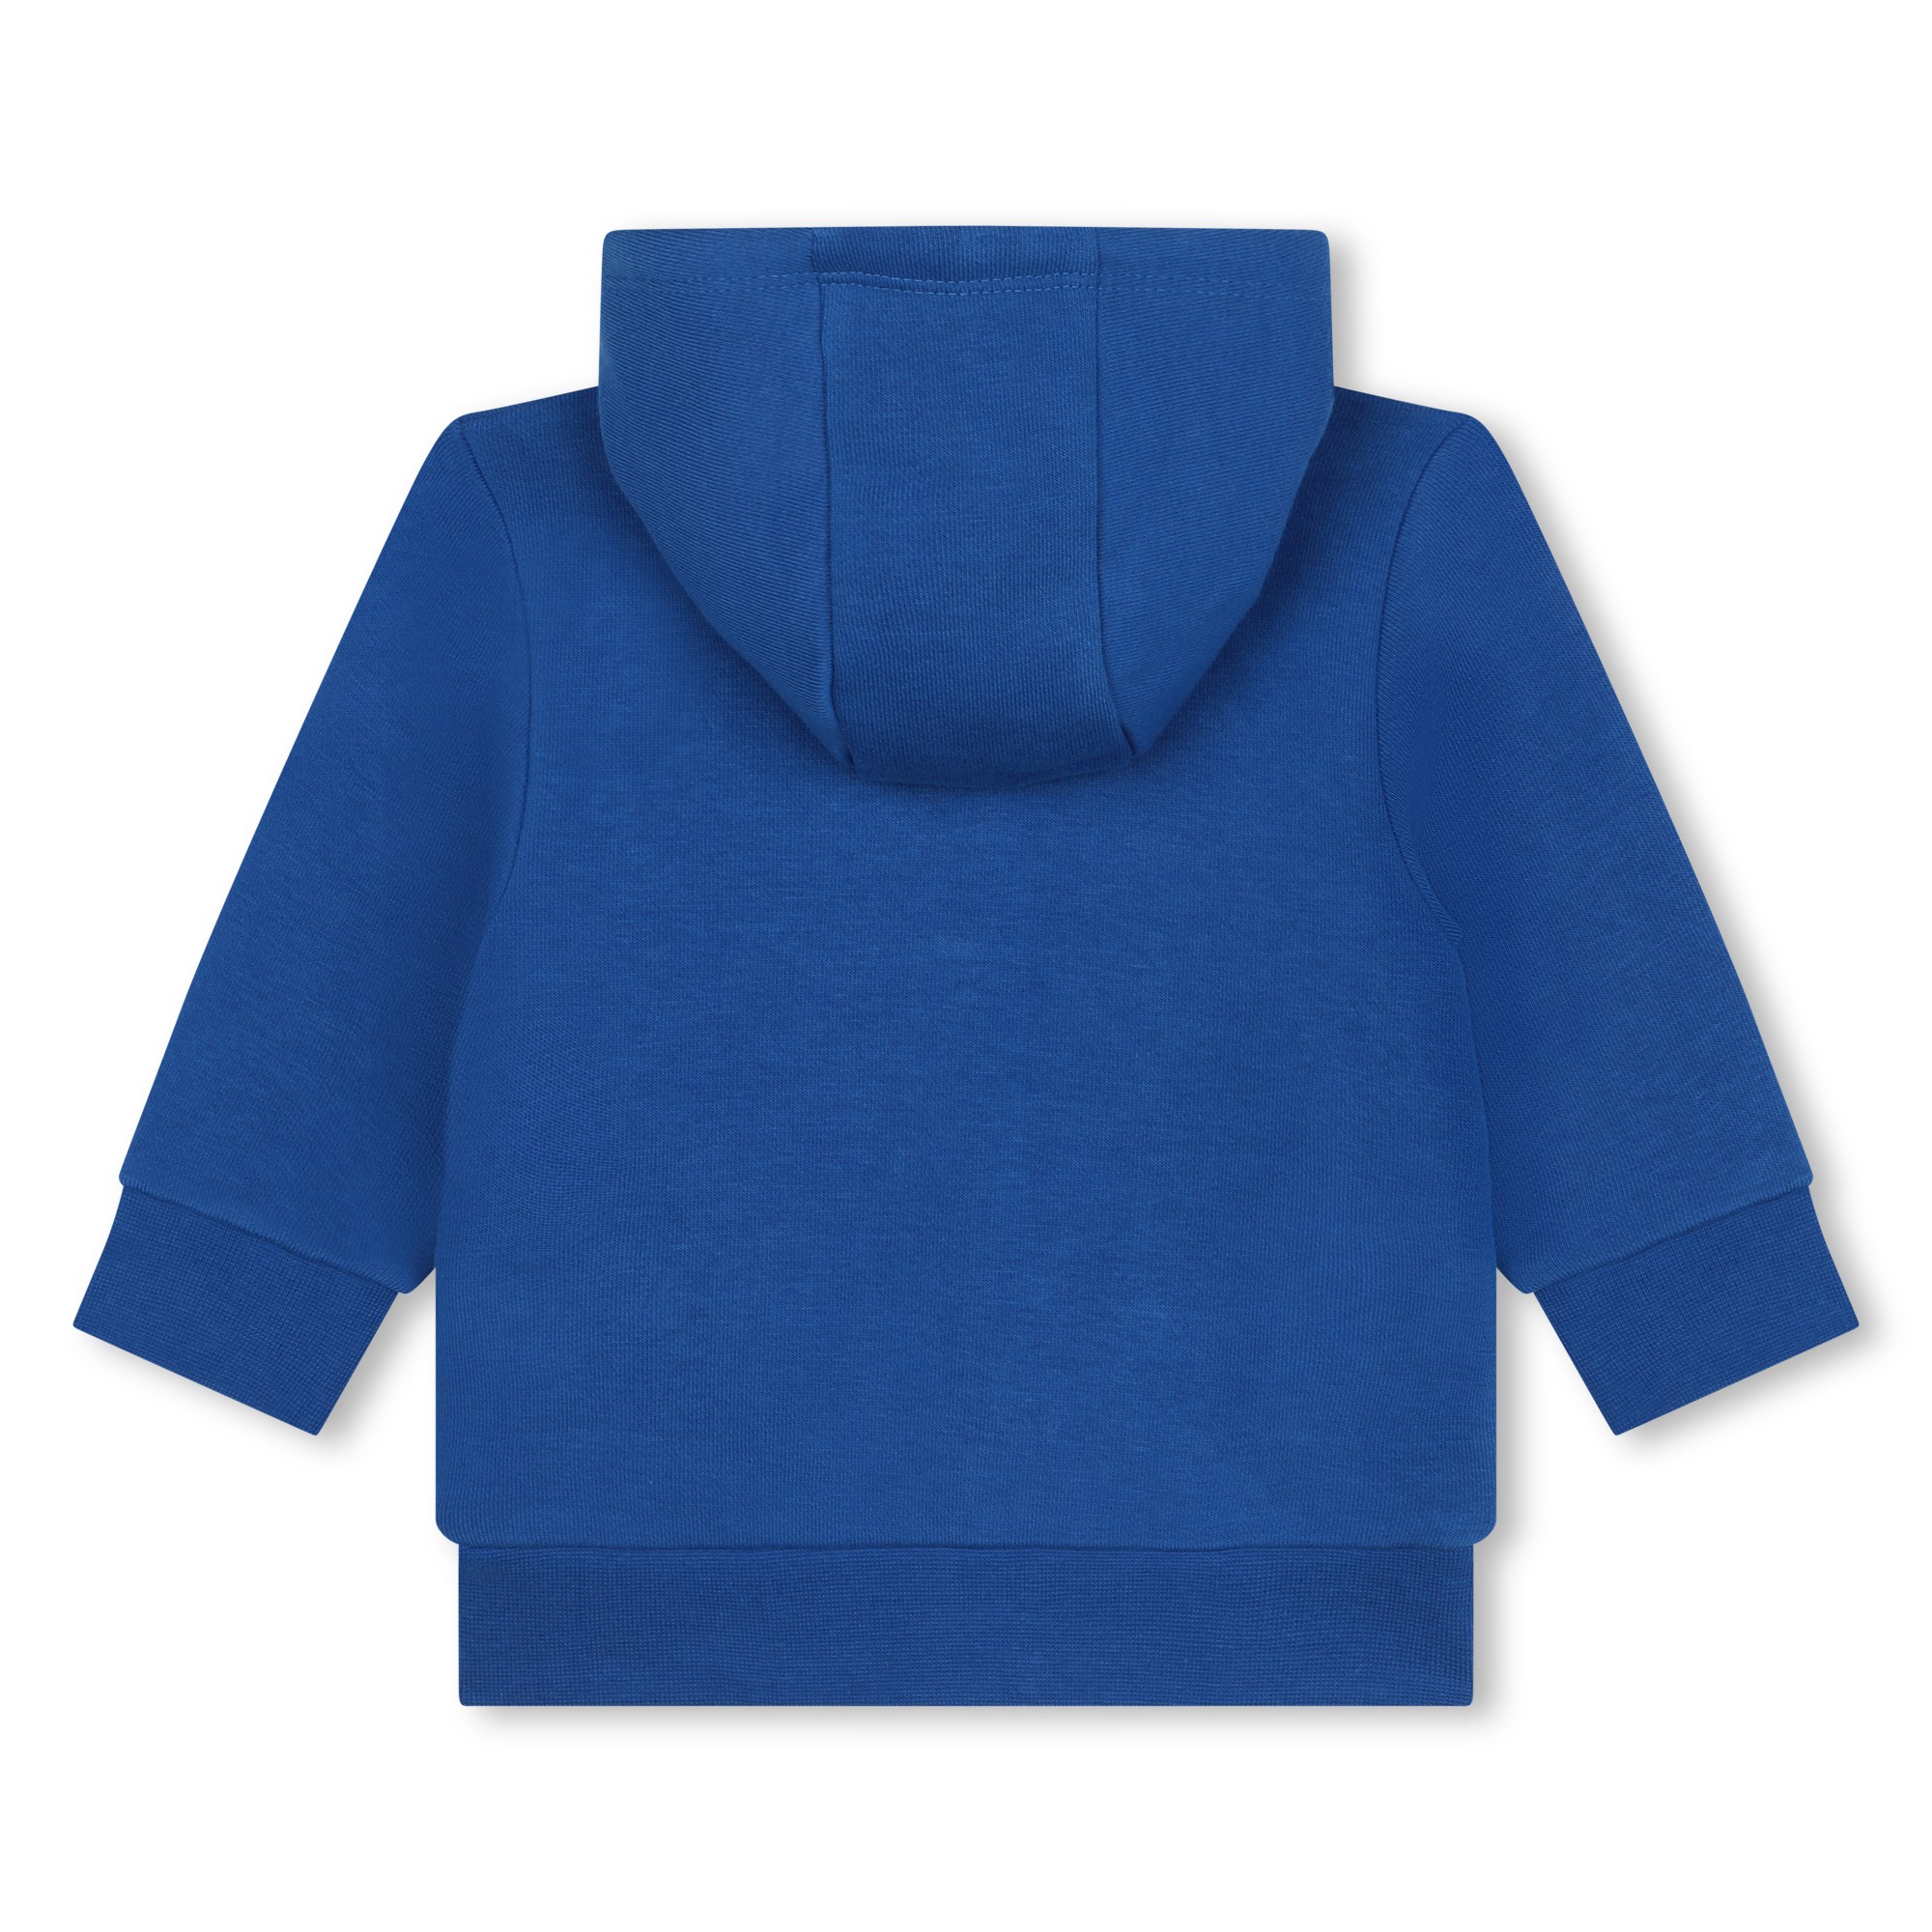 Zip-up sweatshirt with logo BOSS for BOY